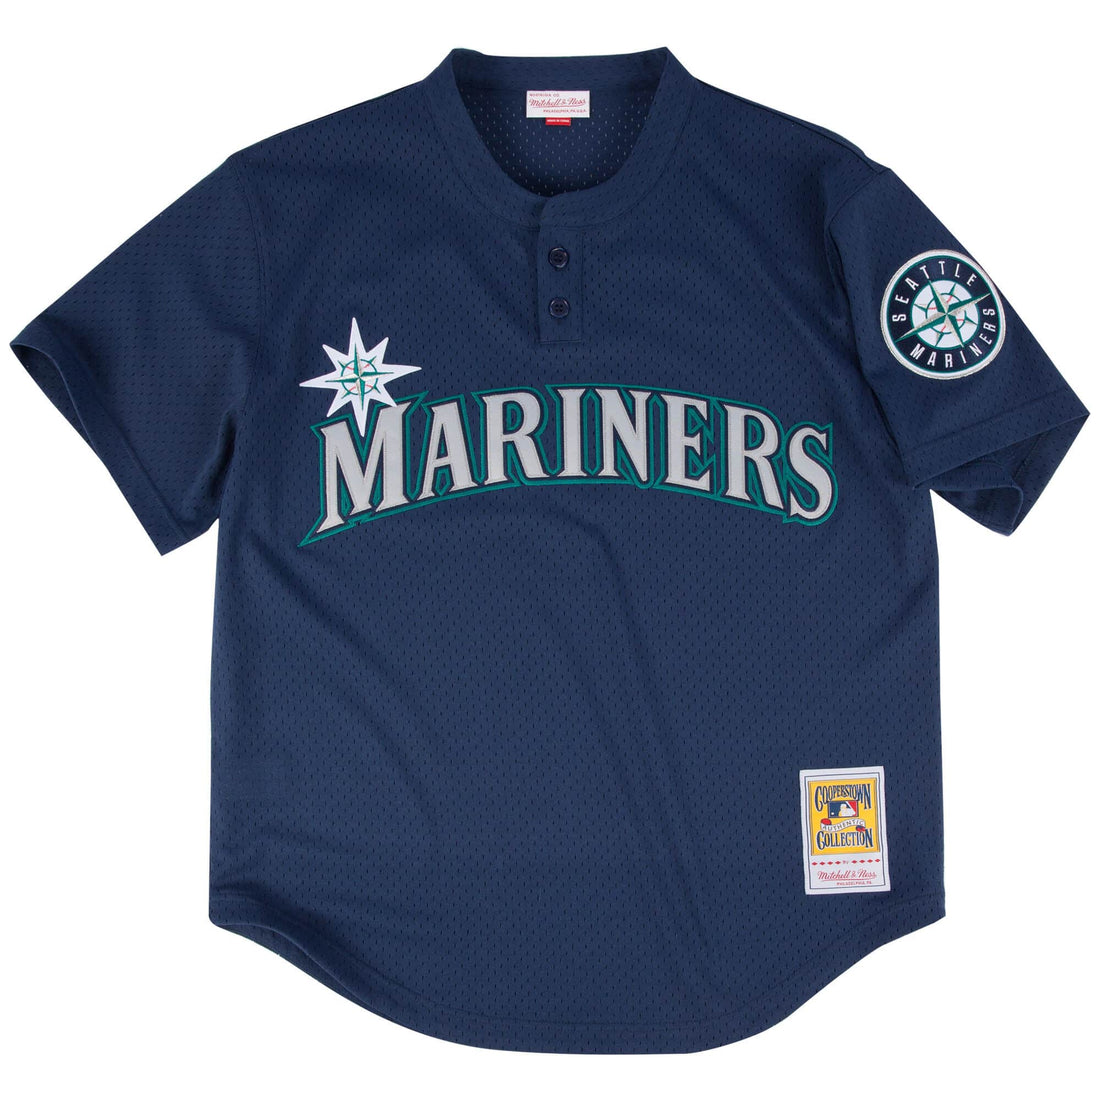 Seattle Mariners Apparel, Mariners Gear, Merchandise